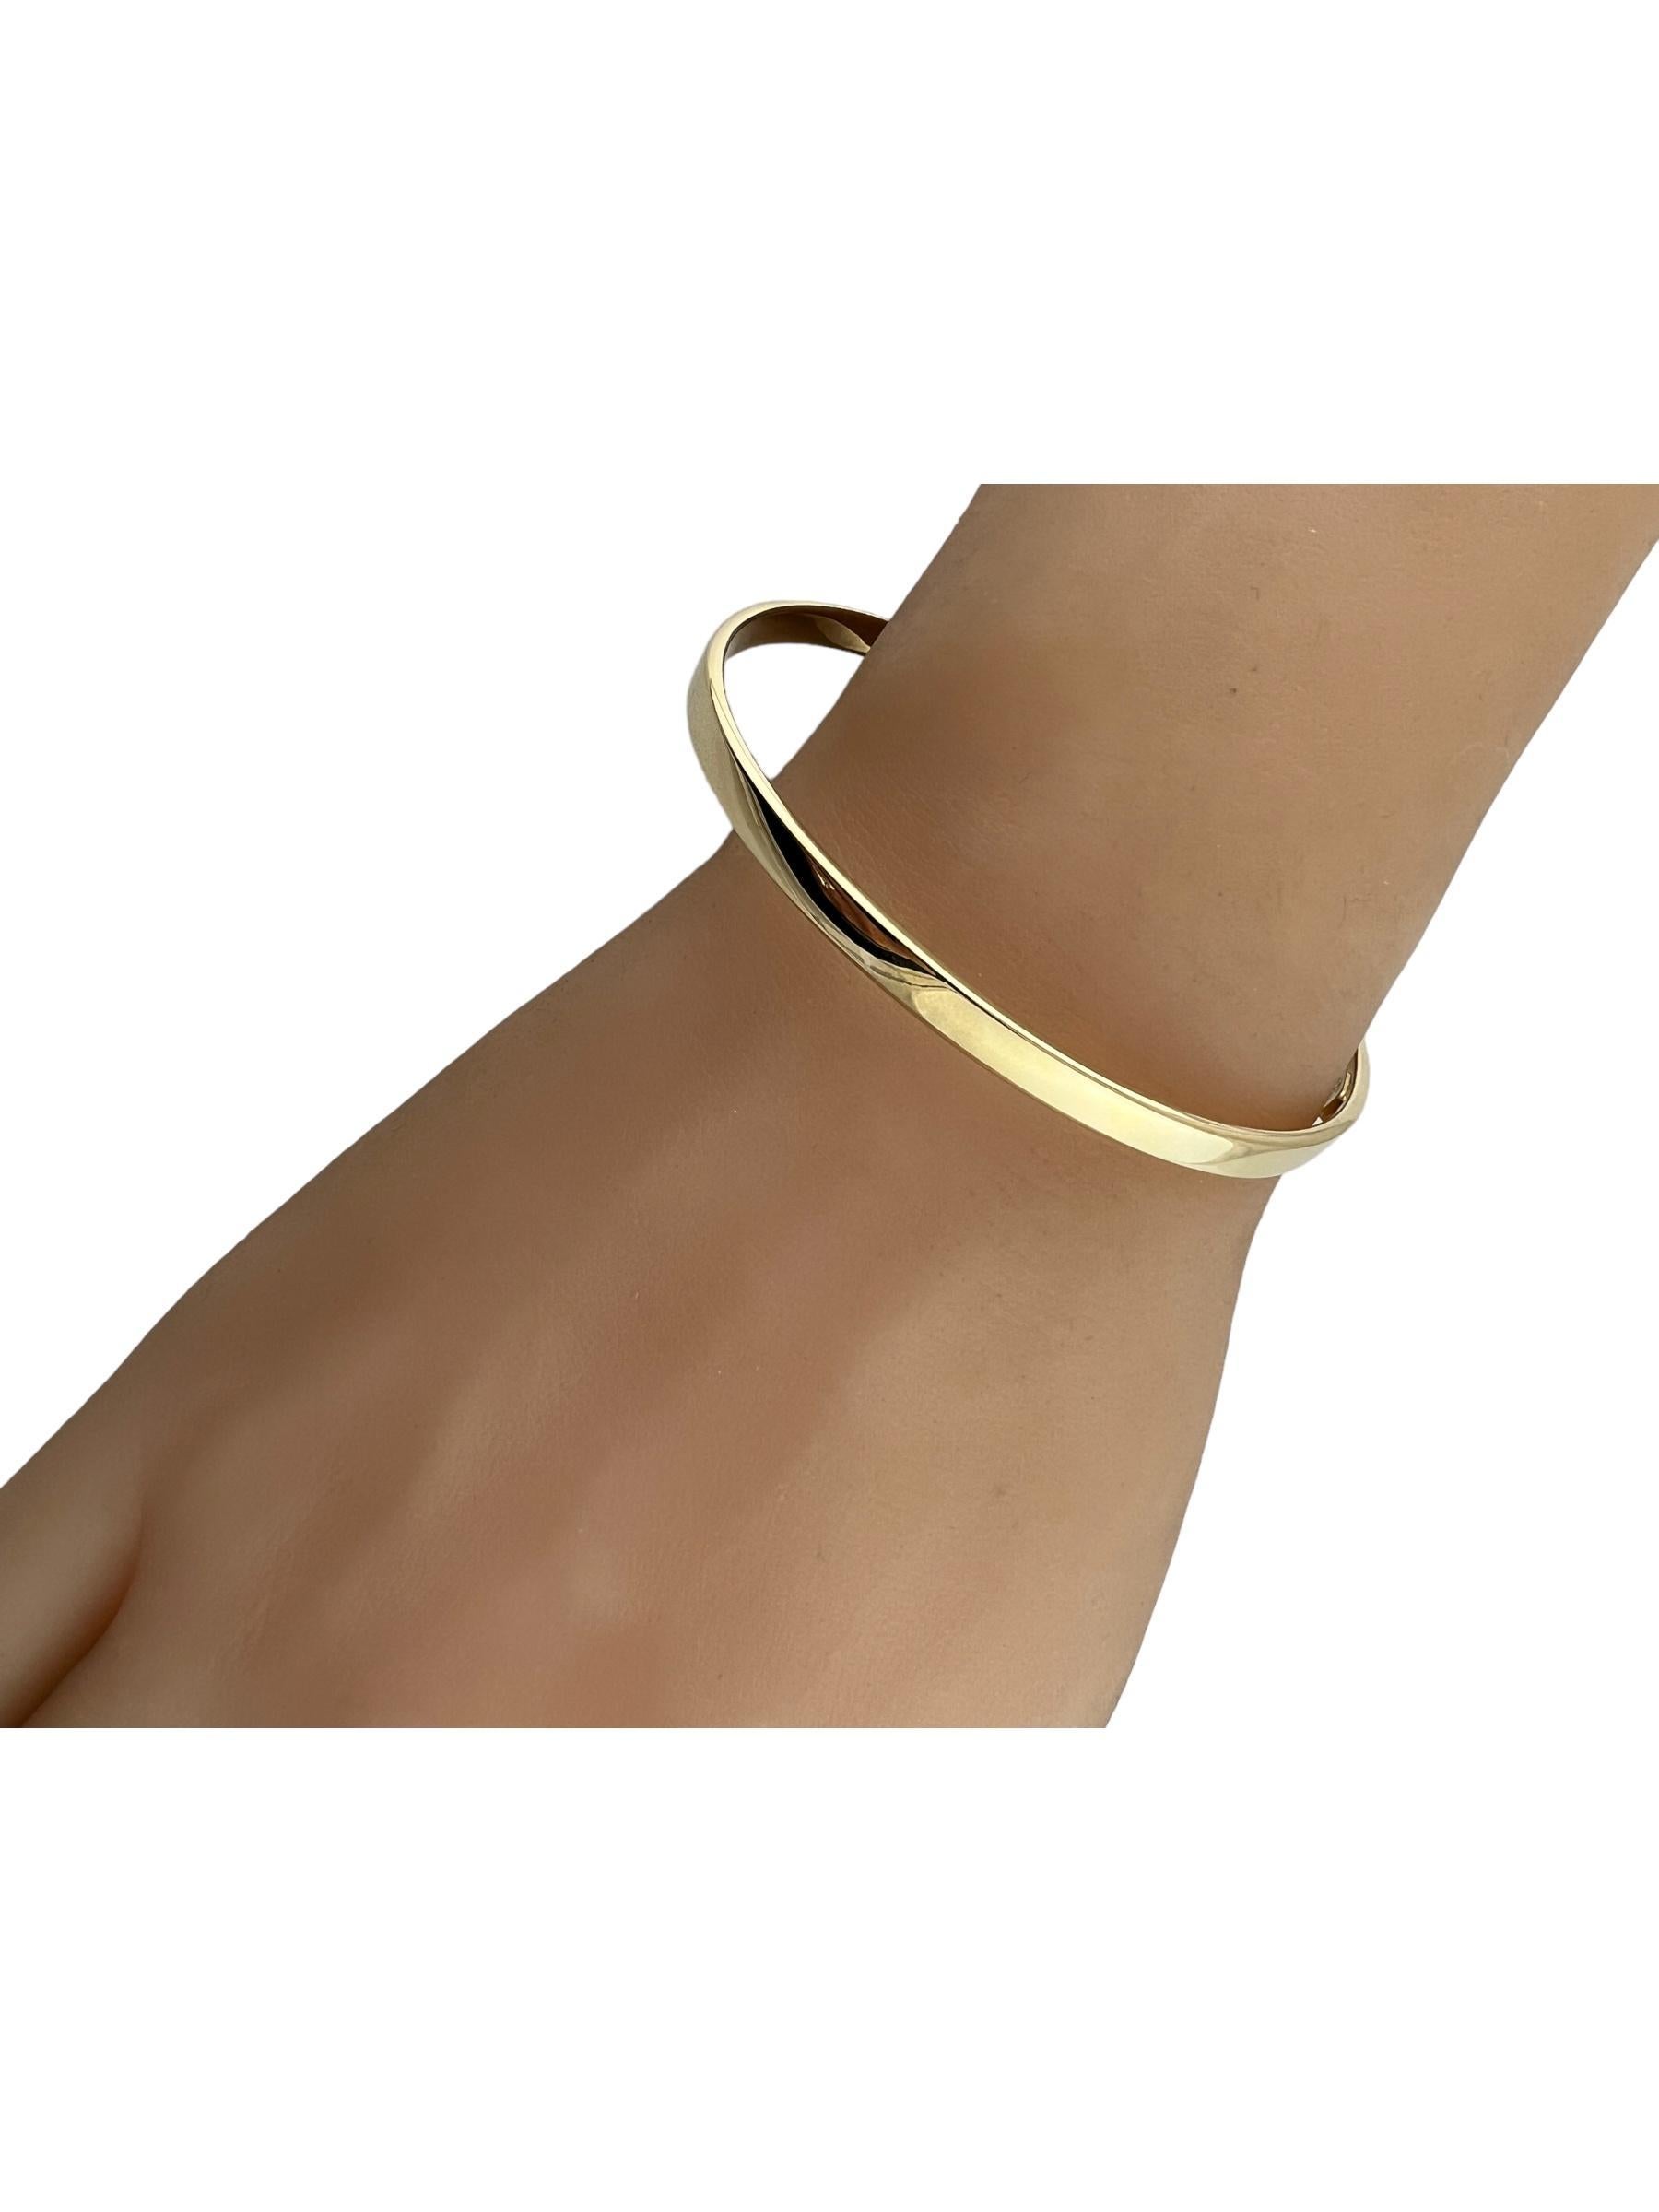 Tiffany & Co. 18K Yellow Gold Oval Bangle Bracelet #15735 3